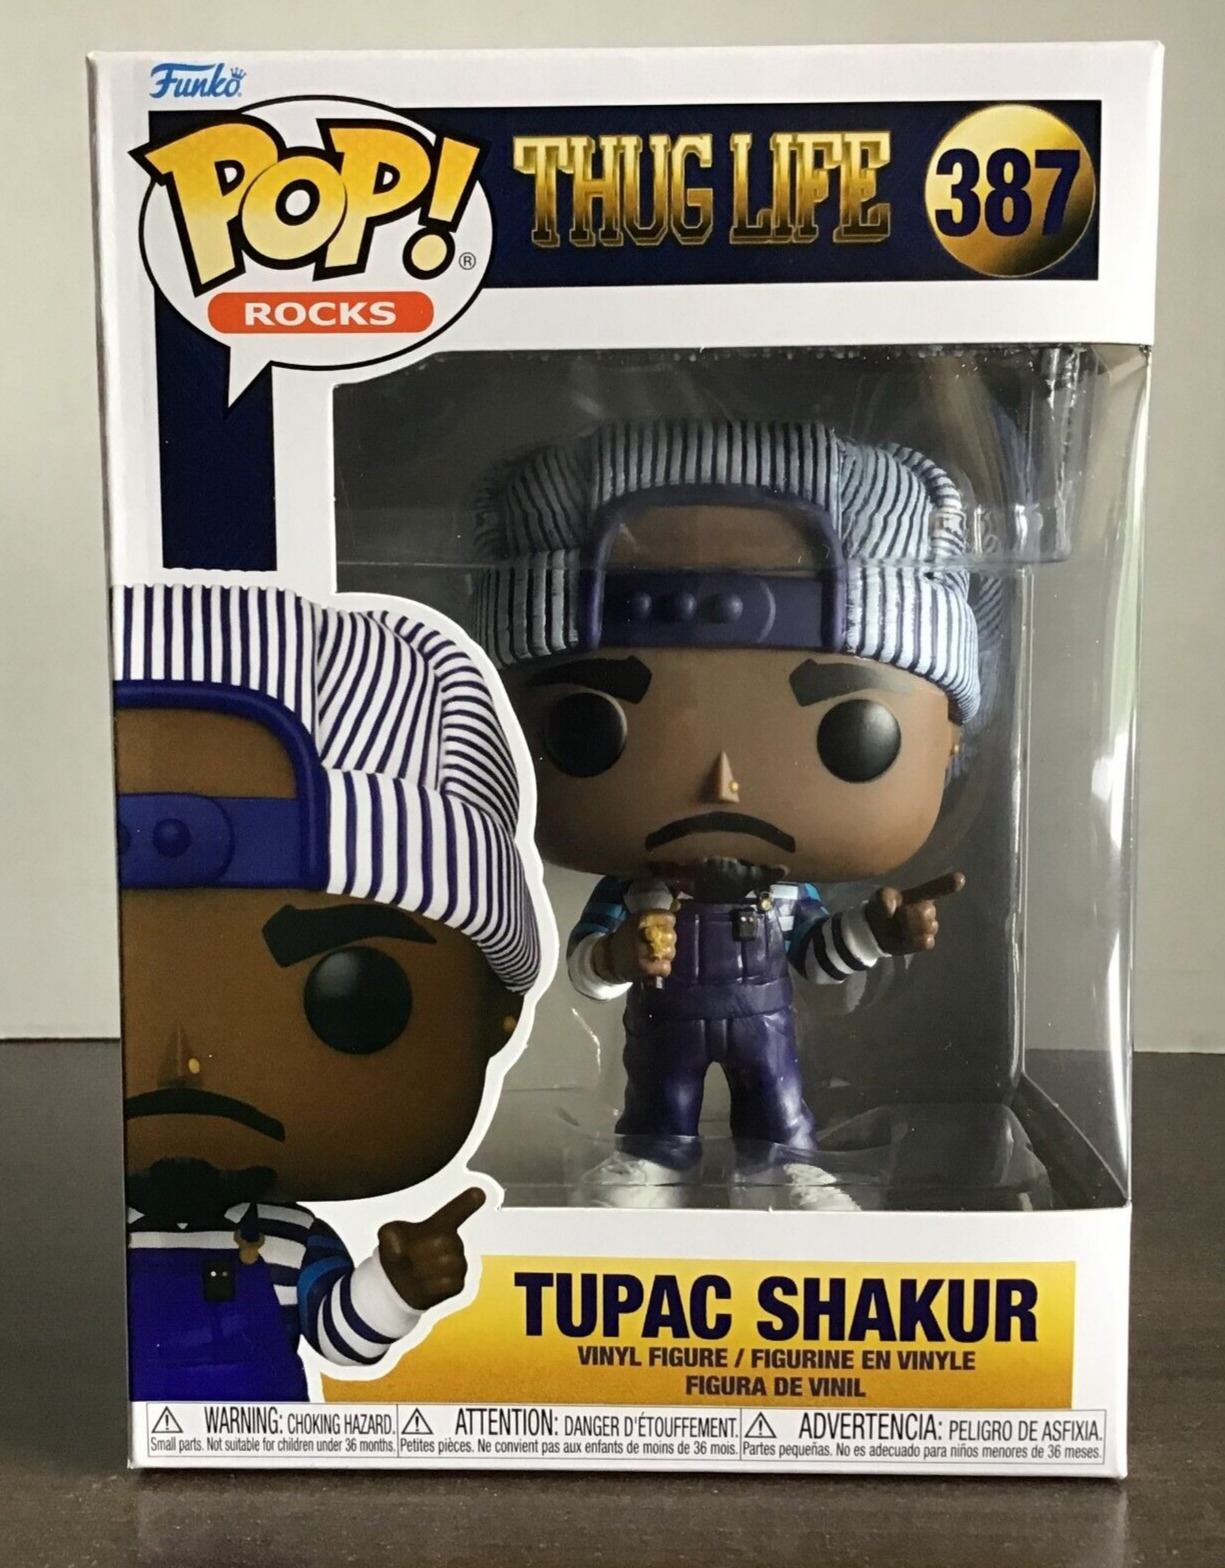 Funko Pop Rocks Tupac Shakur with Microphone 90's Funko Pop Vinyl Figure #387